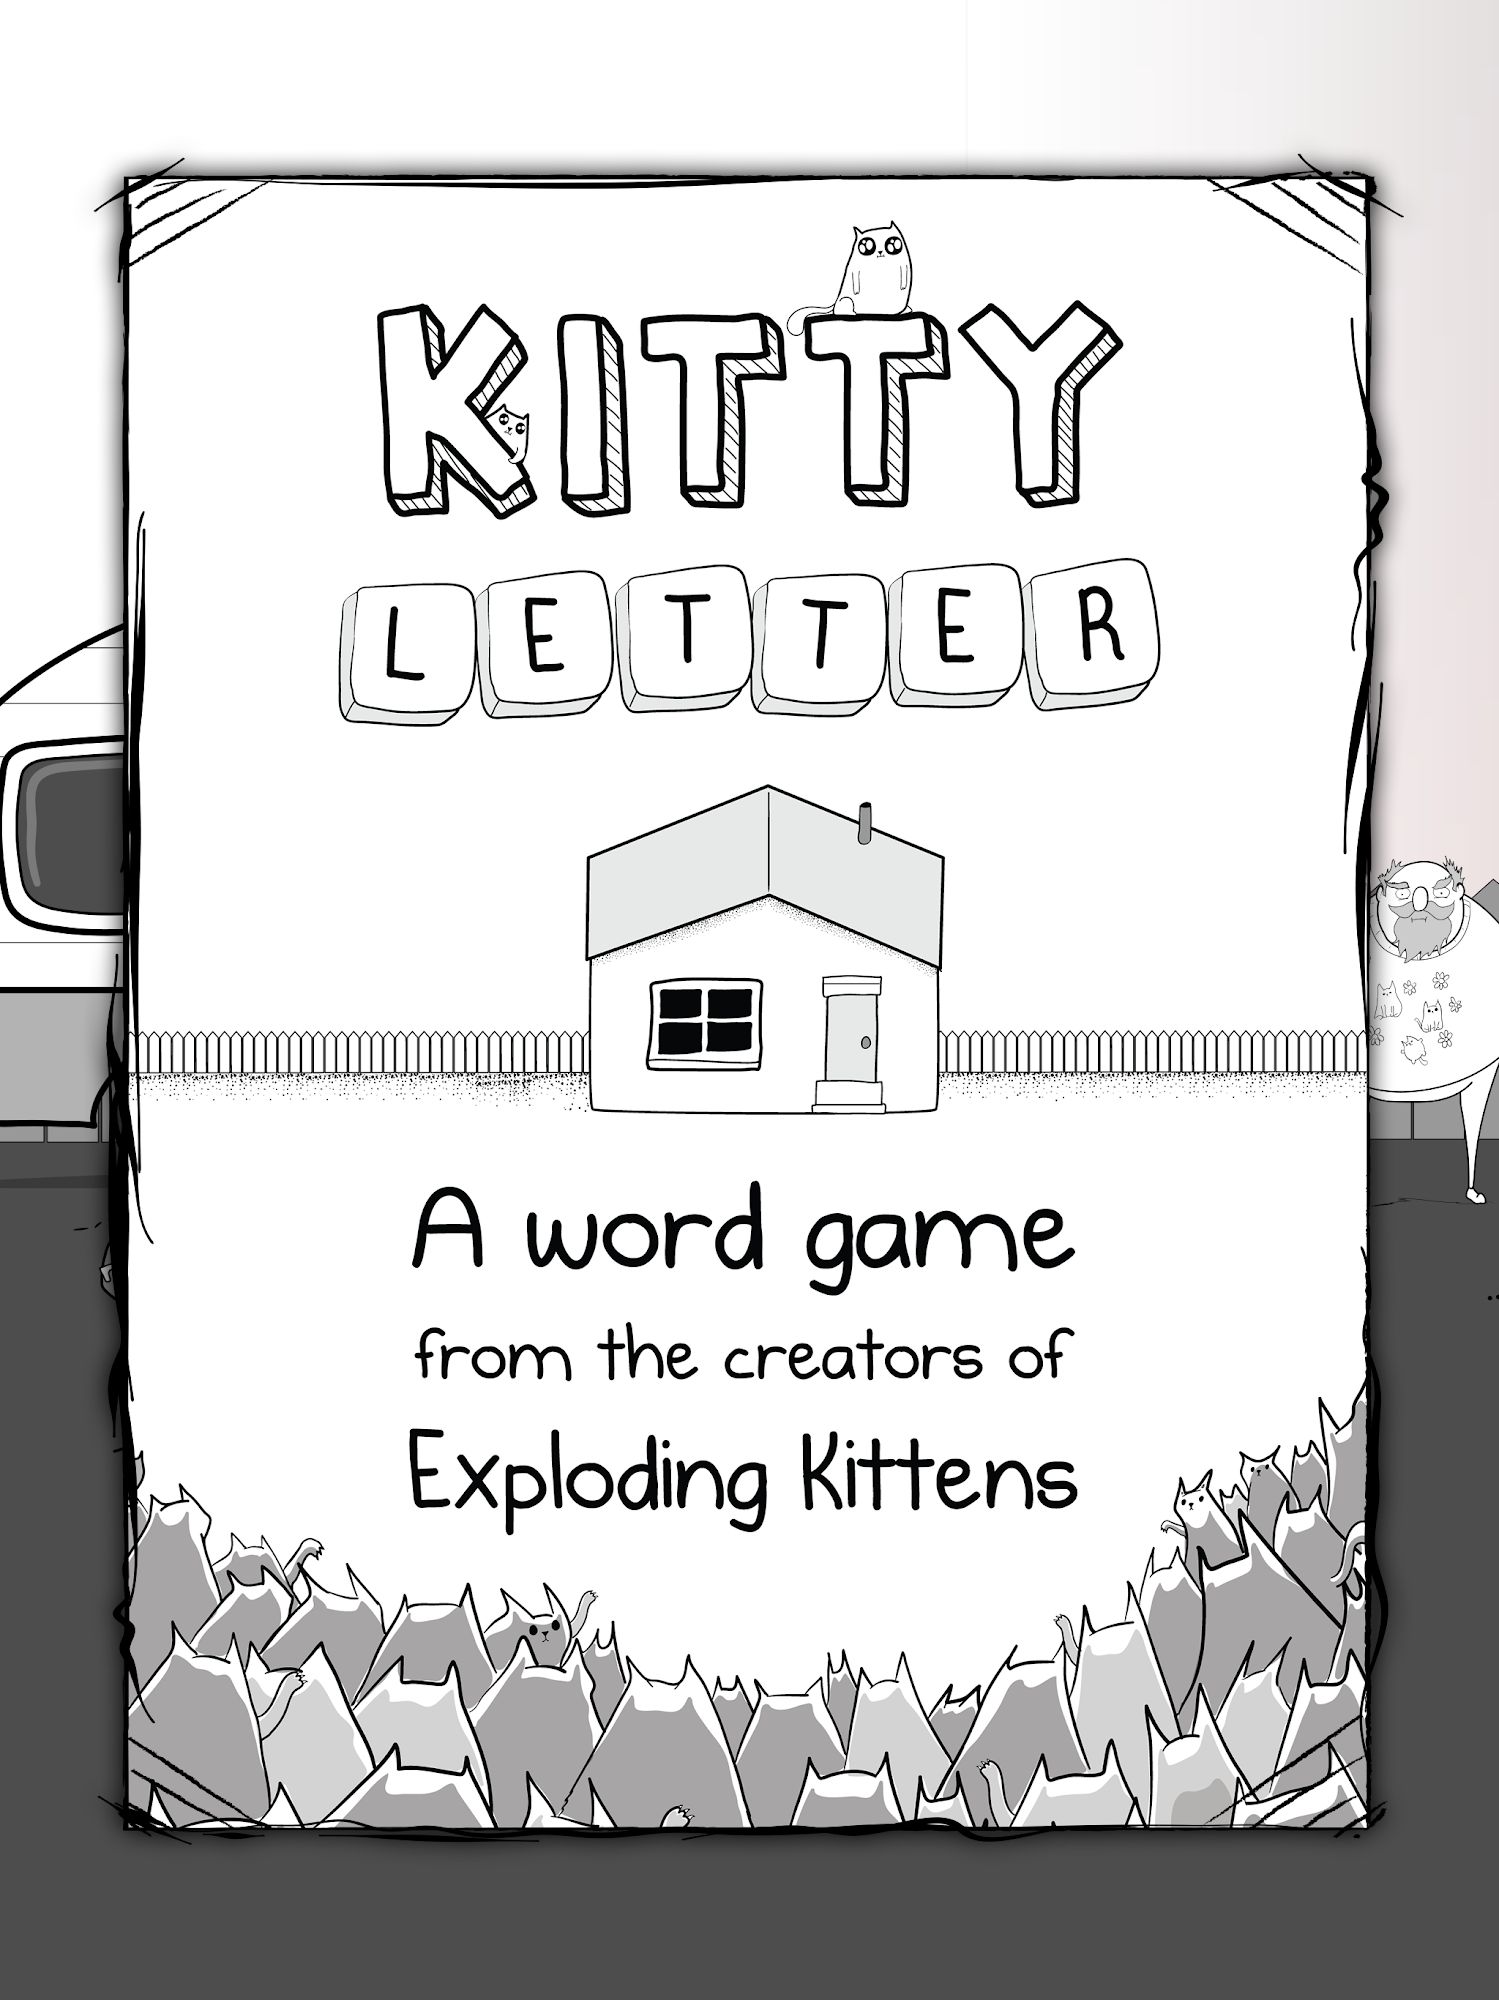 Baixar Kitty Letter para Android grátis.